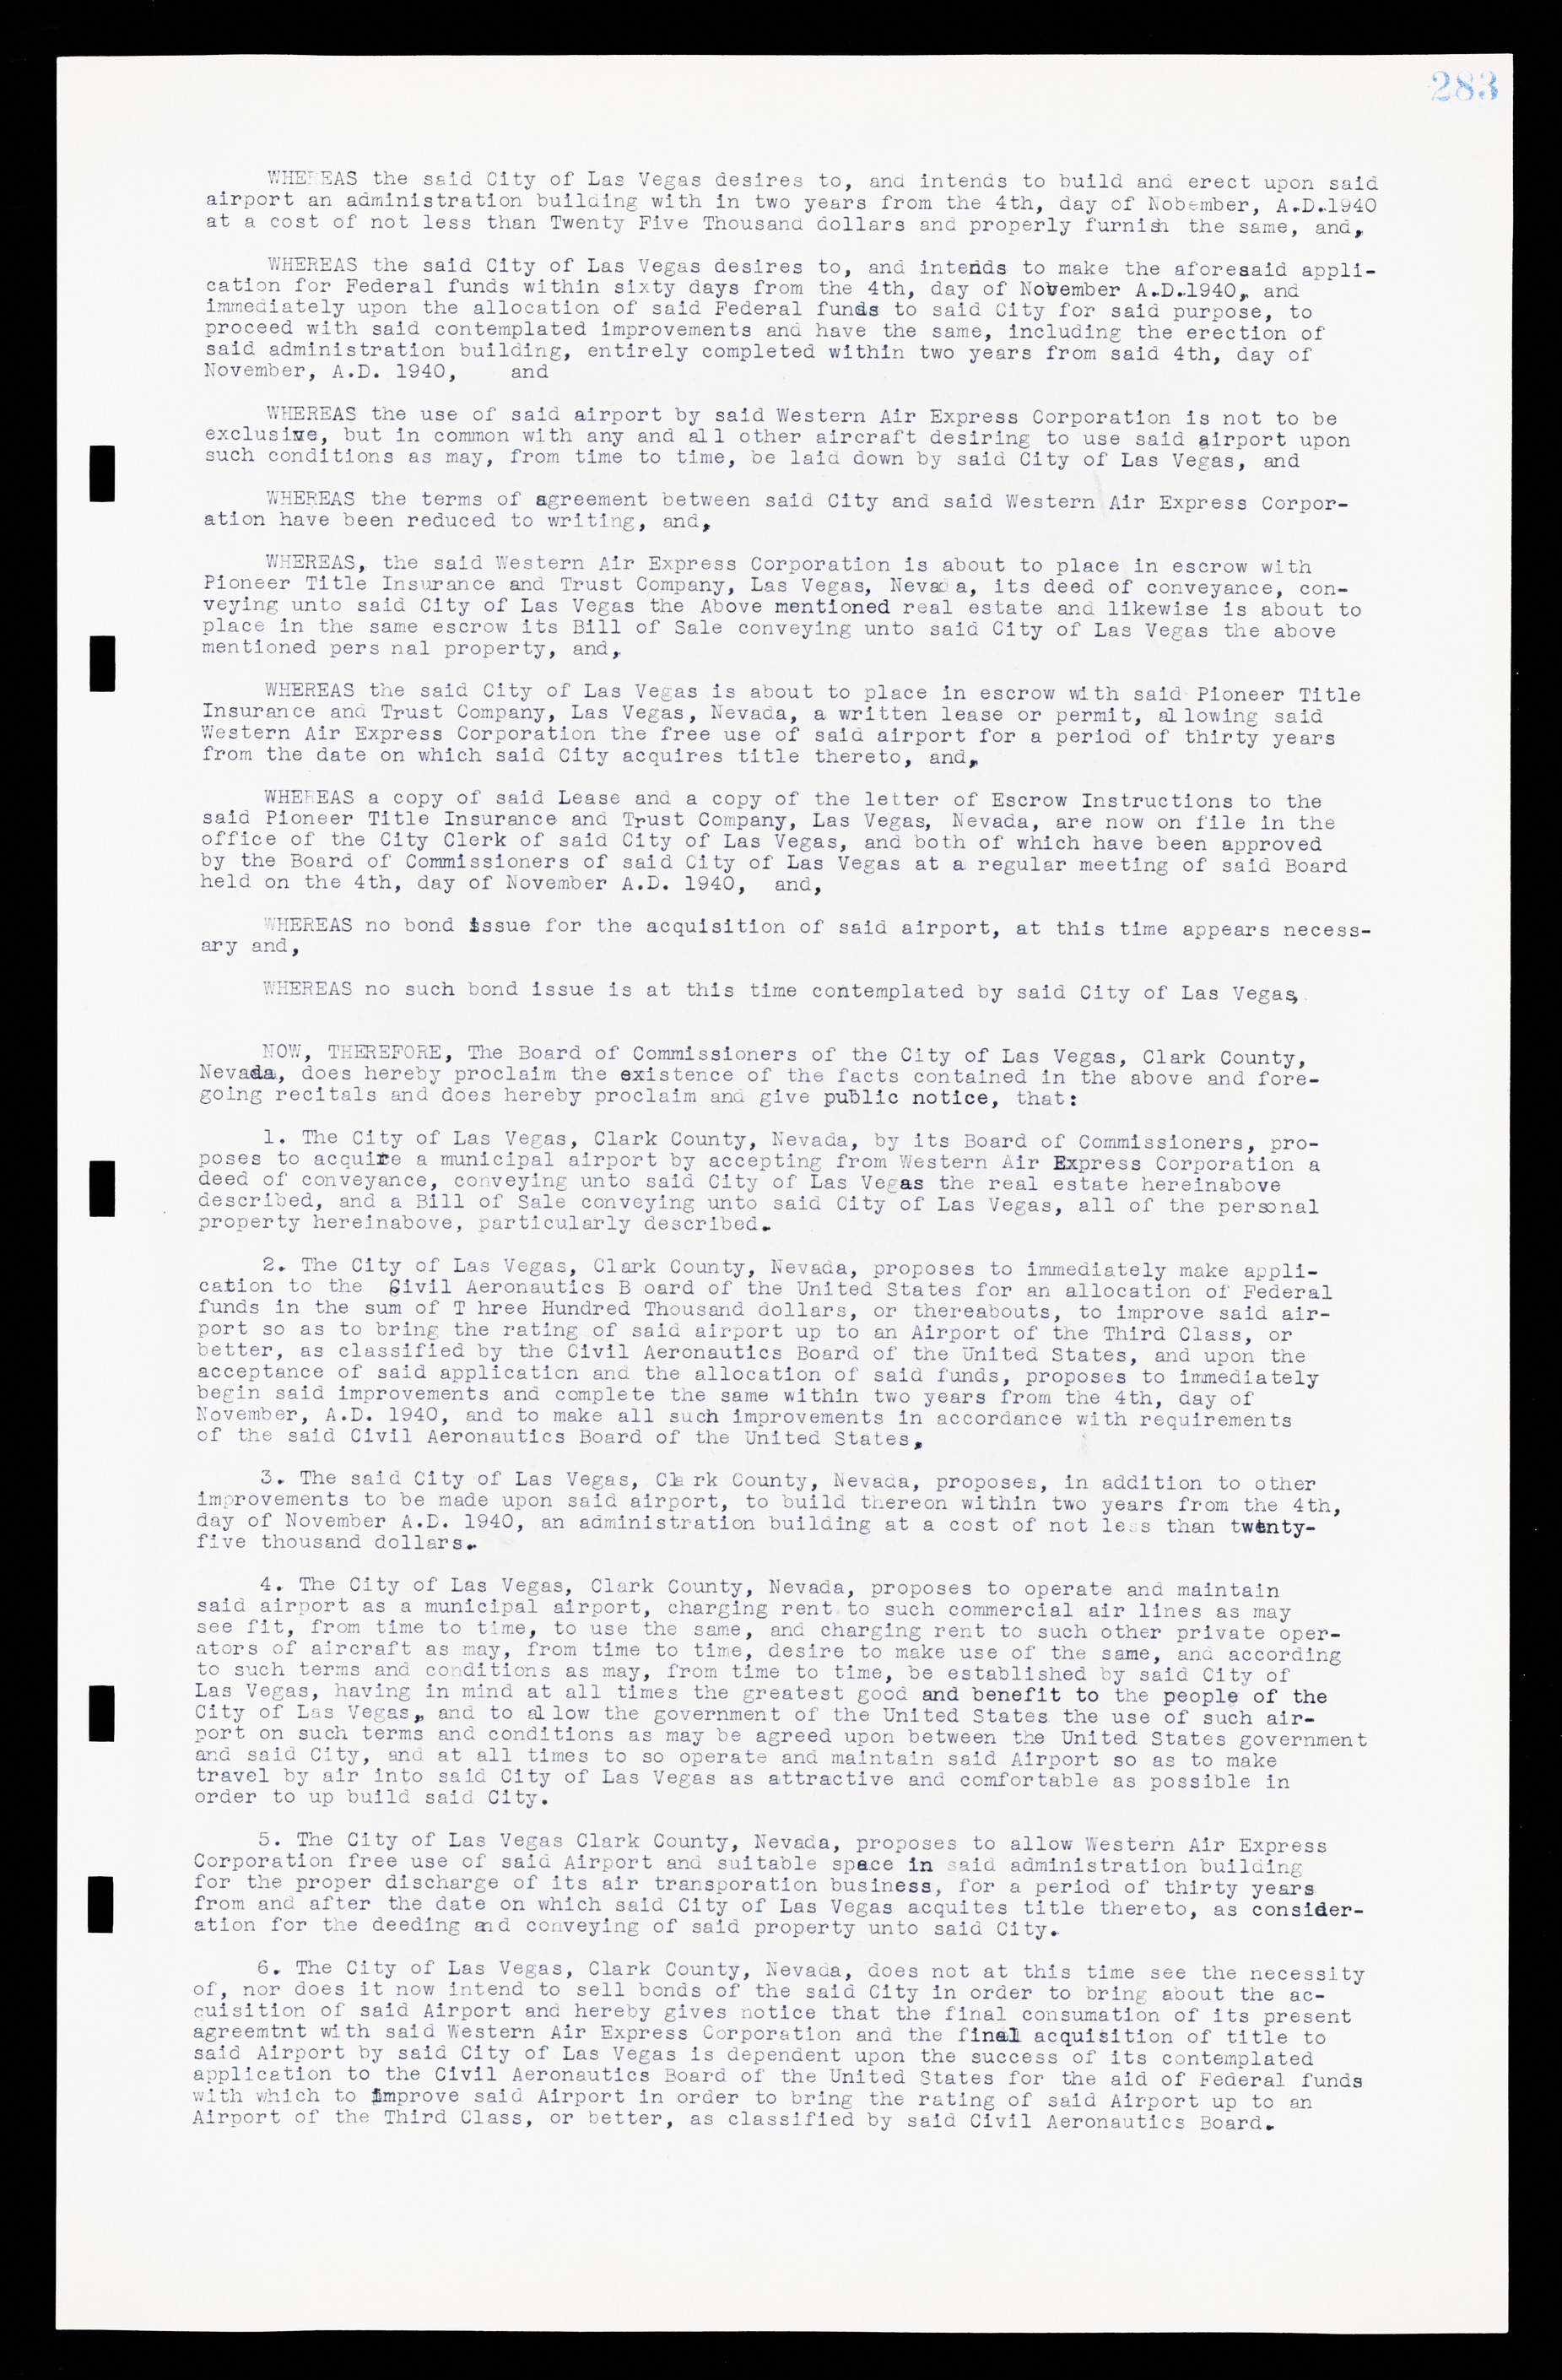 Las Vegas City Commission Minutes, February 17, 1937 to August 4, 1942, lvc000004-305